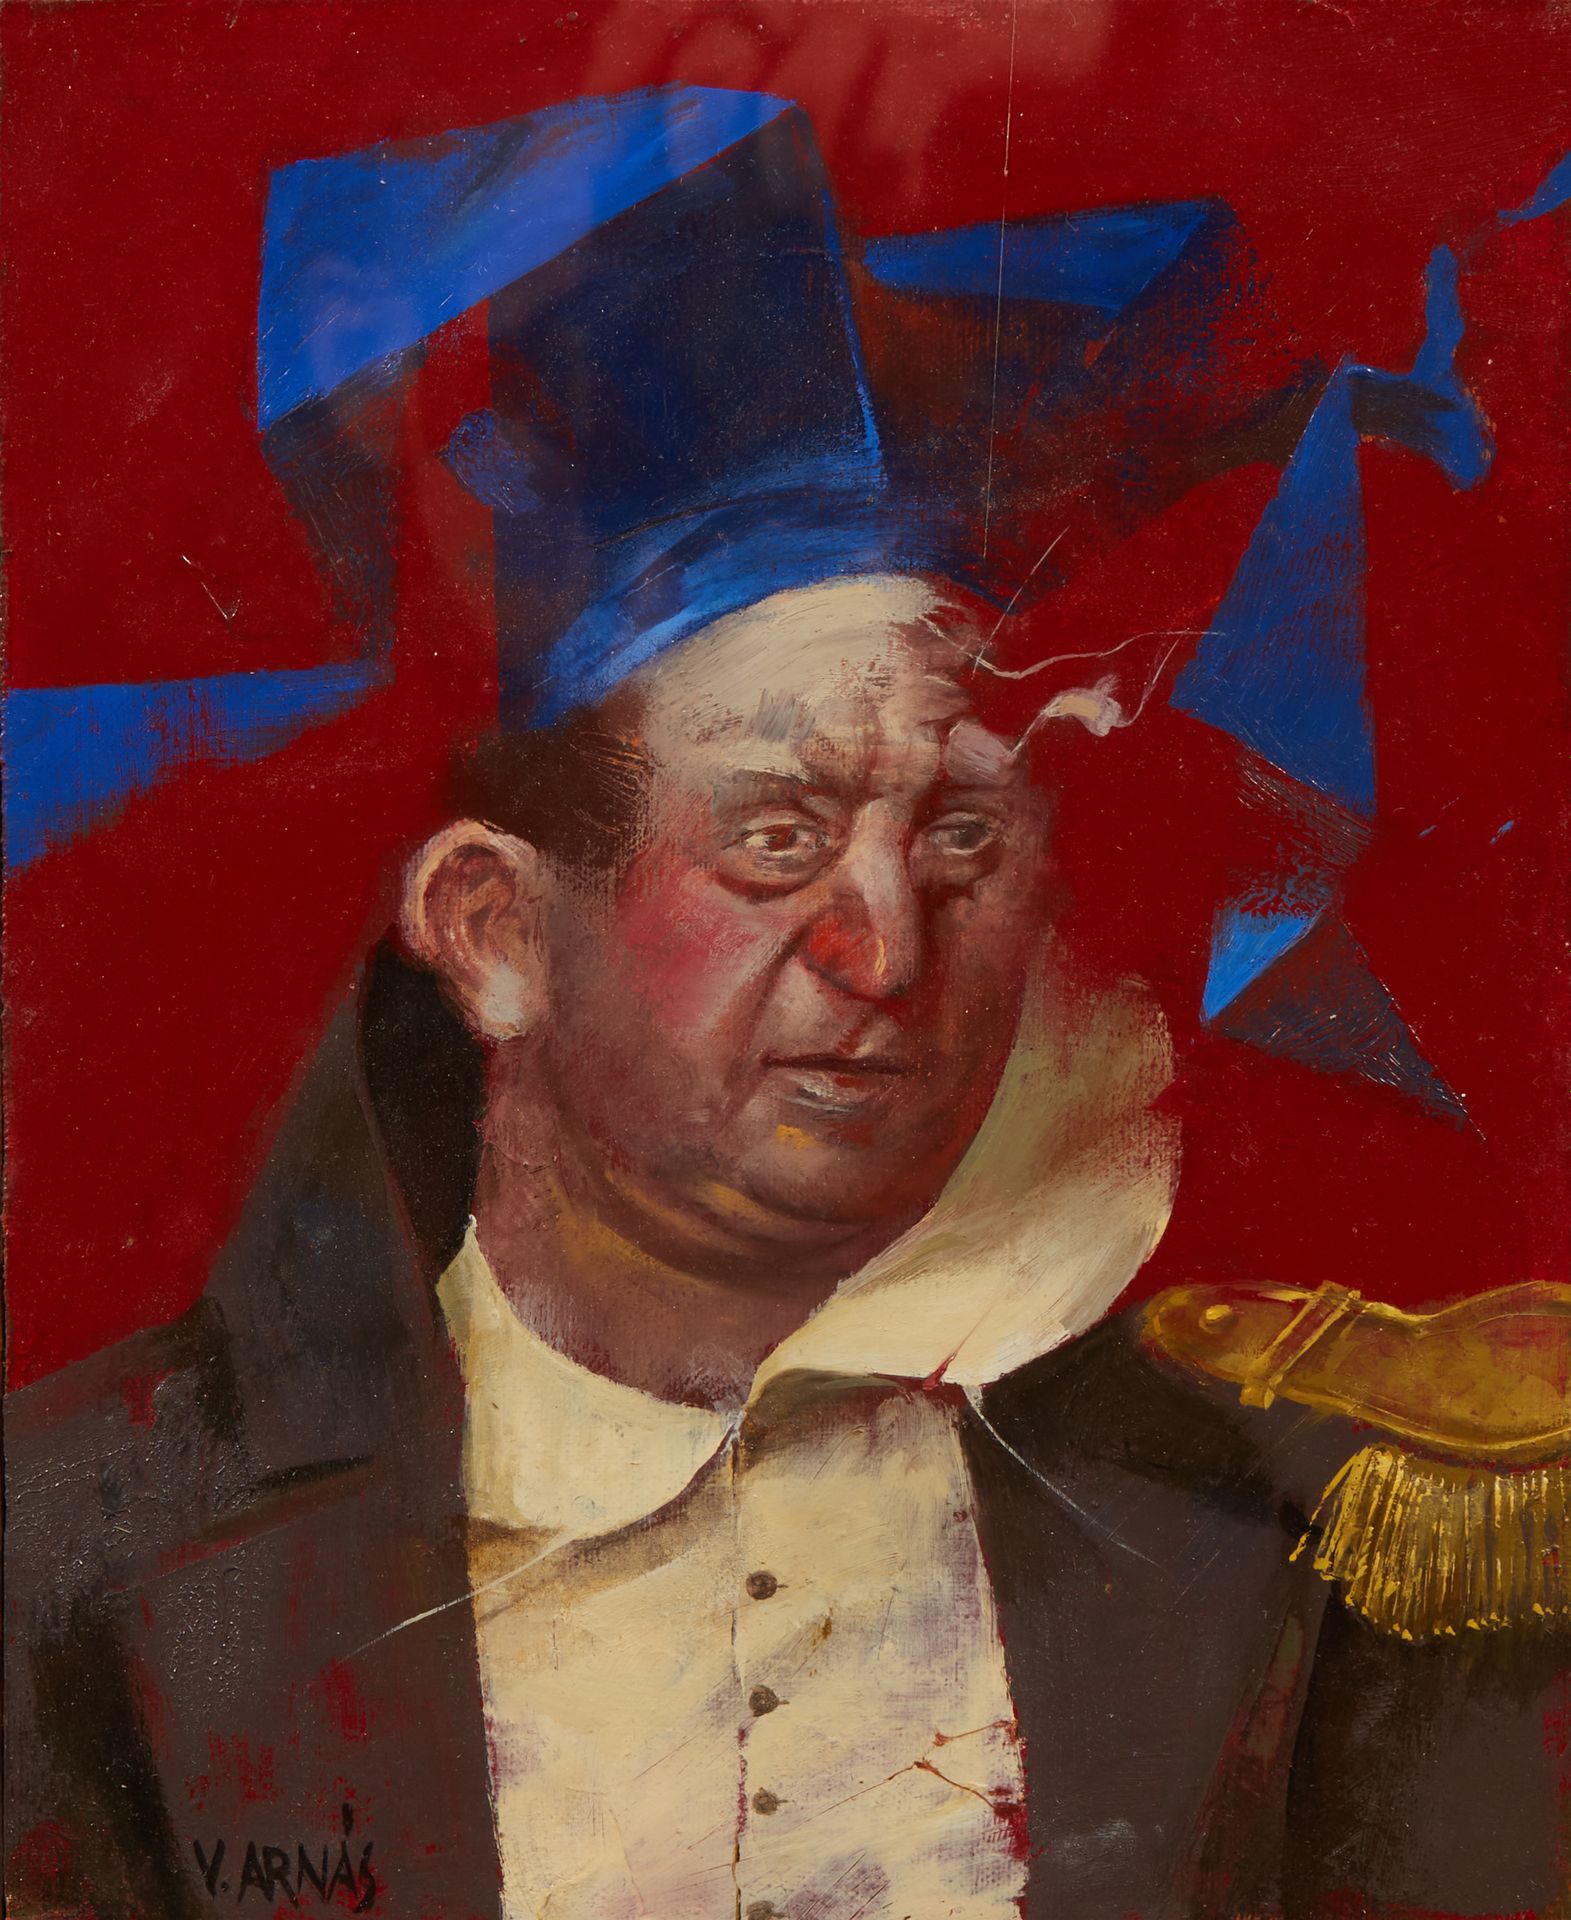 Null Vicente ARNAS LOZANO (生于1949年)
红色背景下戴着蓝色帽子的军官画像
布面油画，左下角有签名
26 x 23 cm